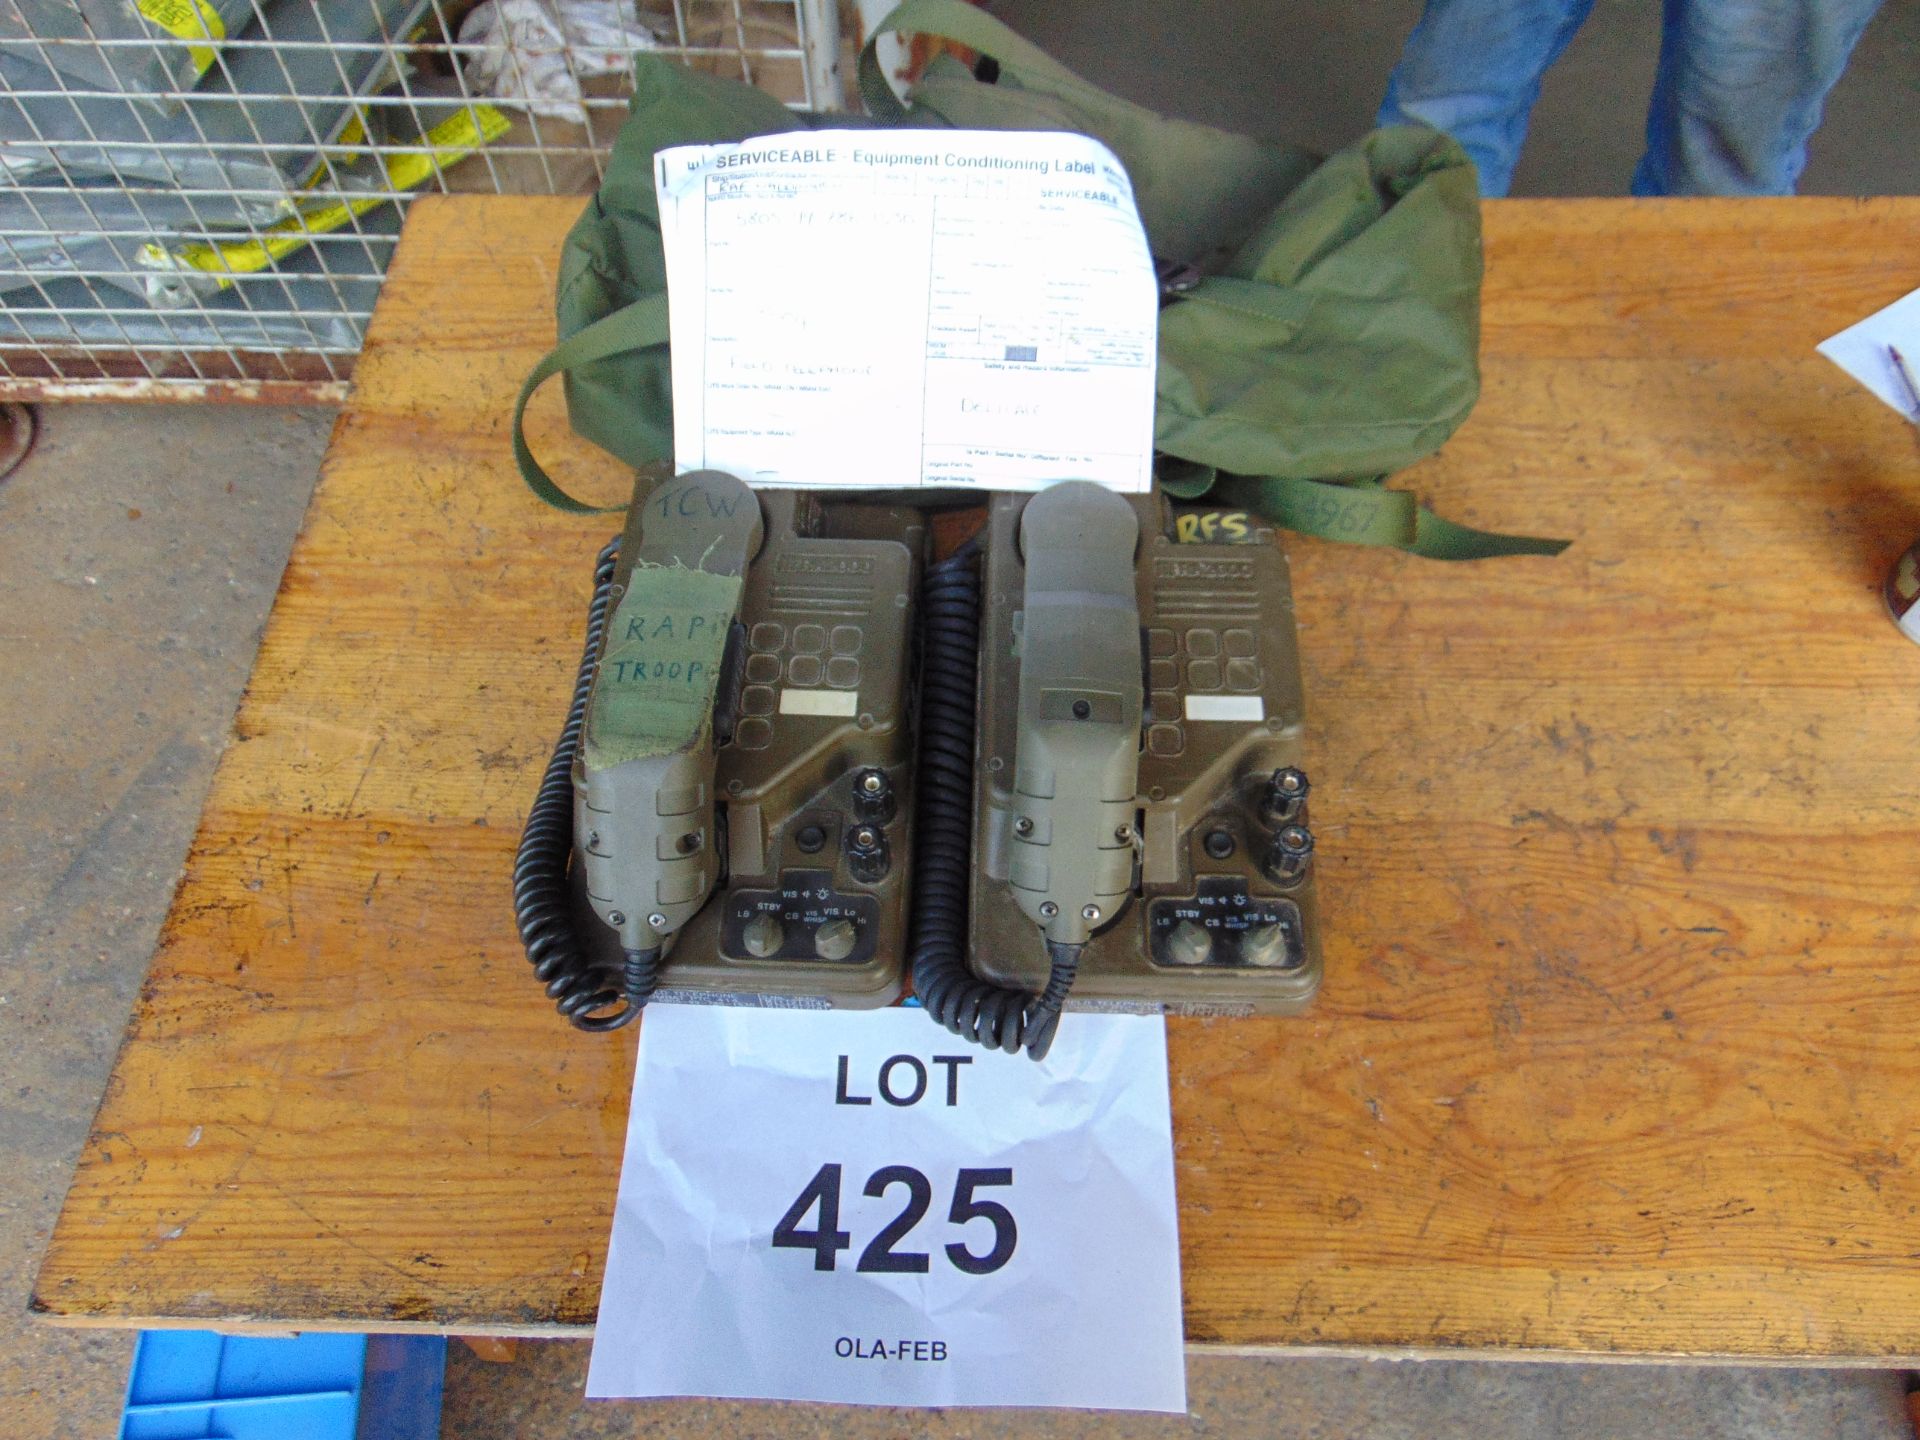 2 x Field Telephone Combat PTC 414 Racal 2000 c/w Bags